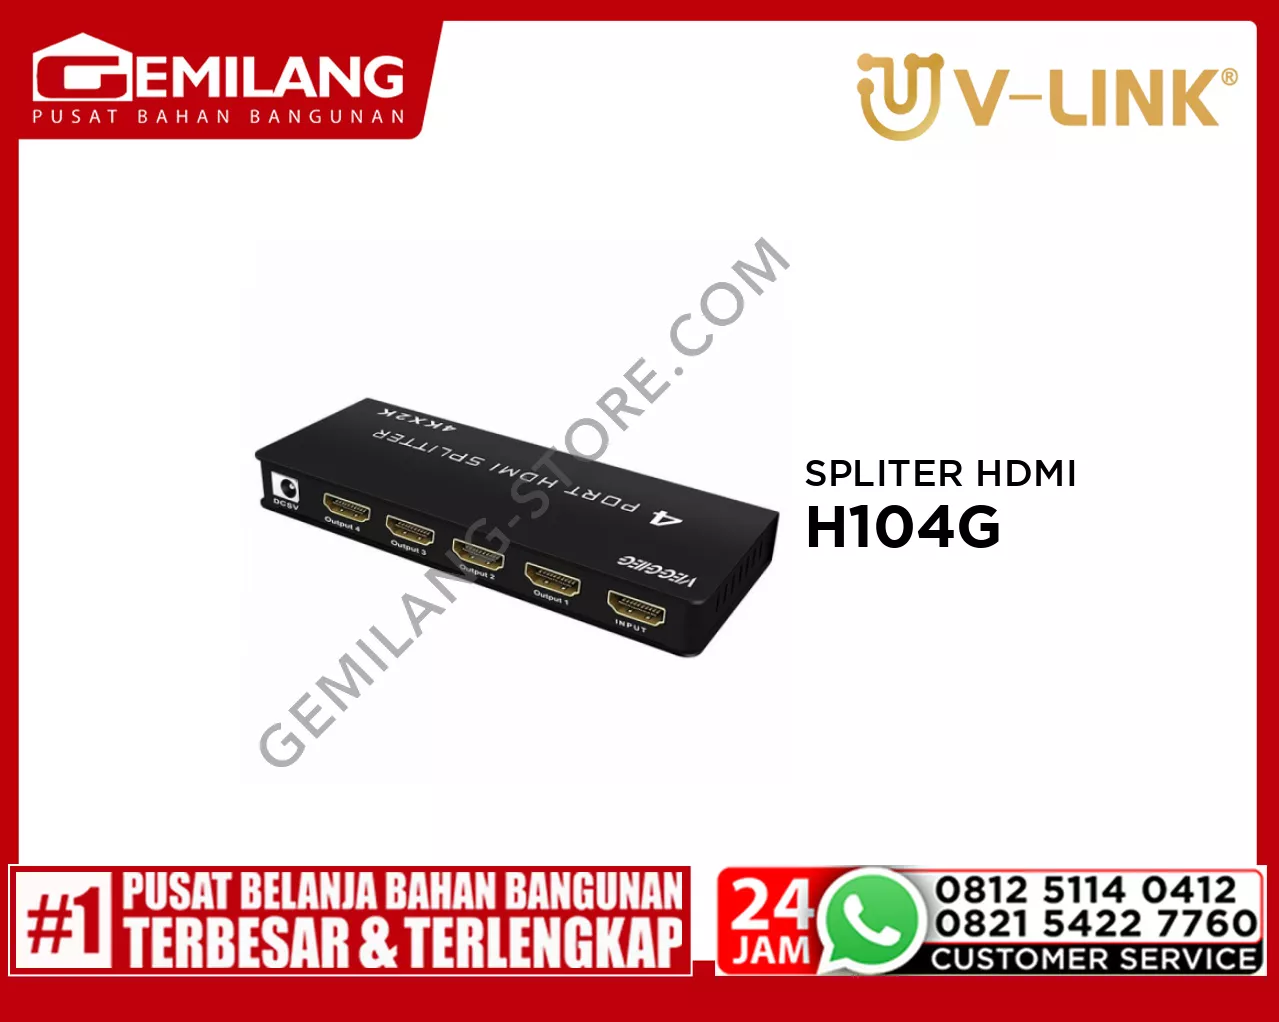 V-LINK SPLITER HDMI 4 IN 1 VEGGIEG H104G